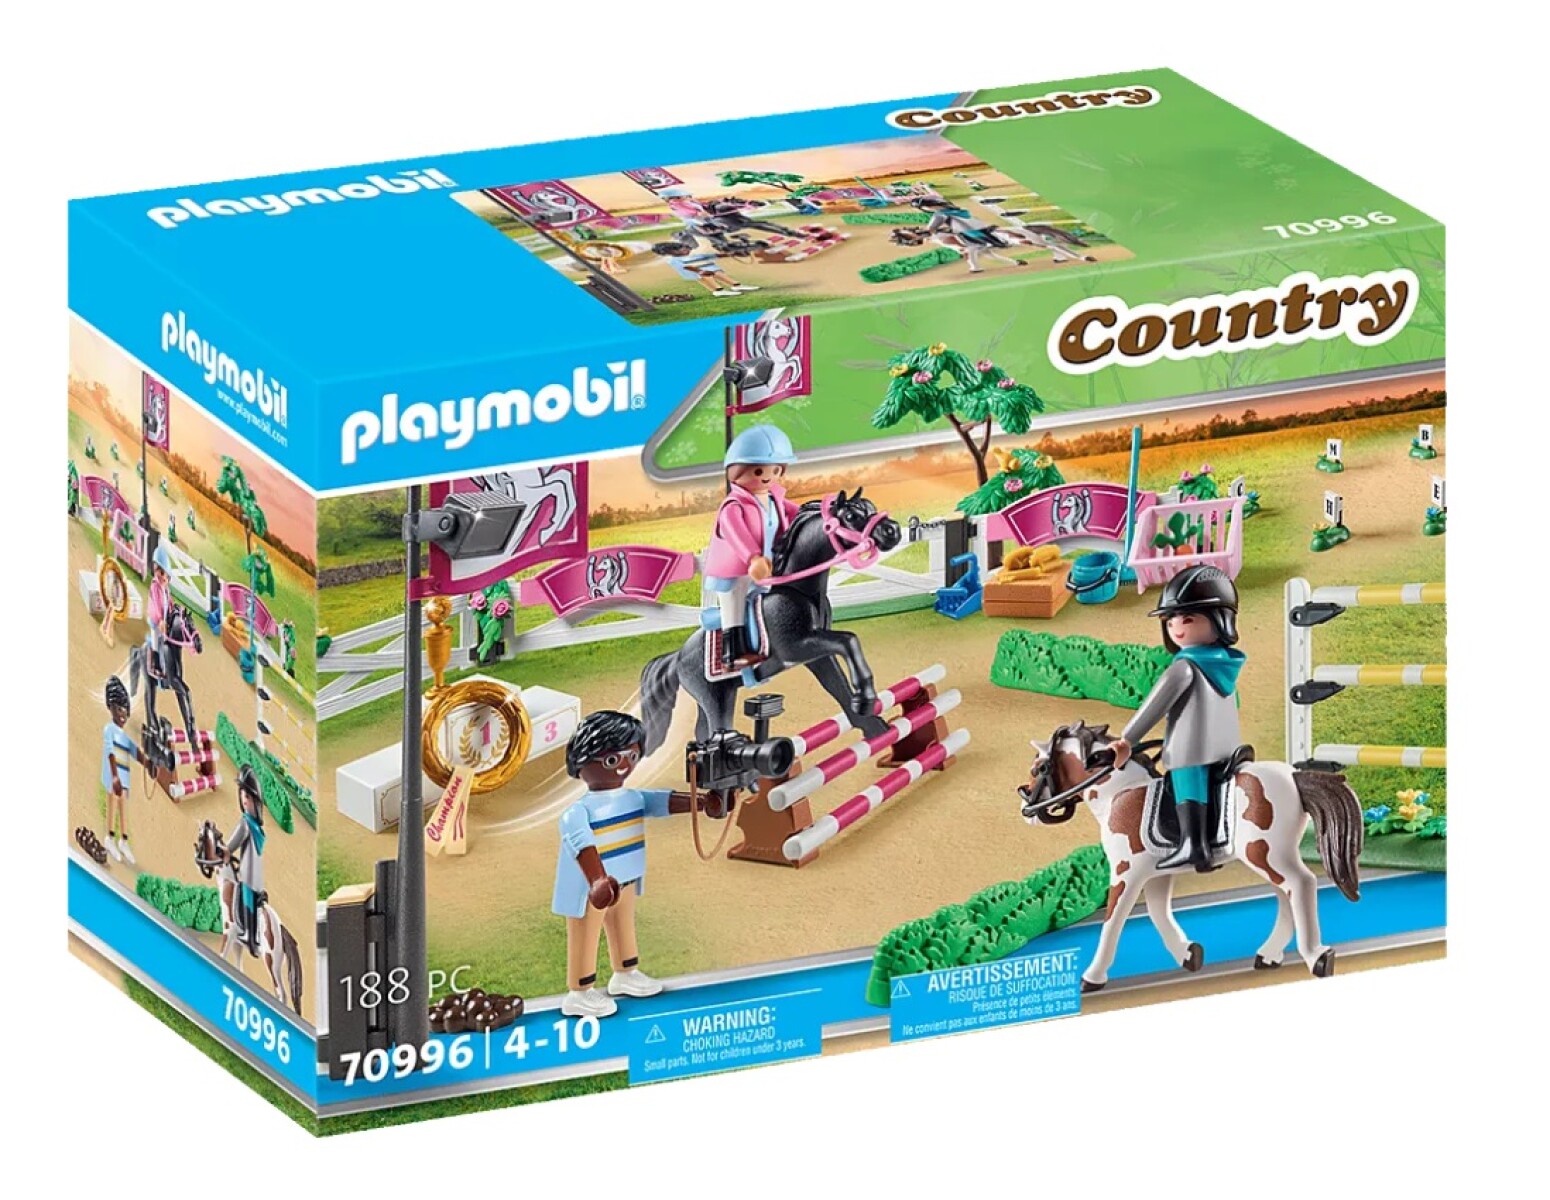 Set Playmobil Torneo de Equitación - 001 